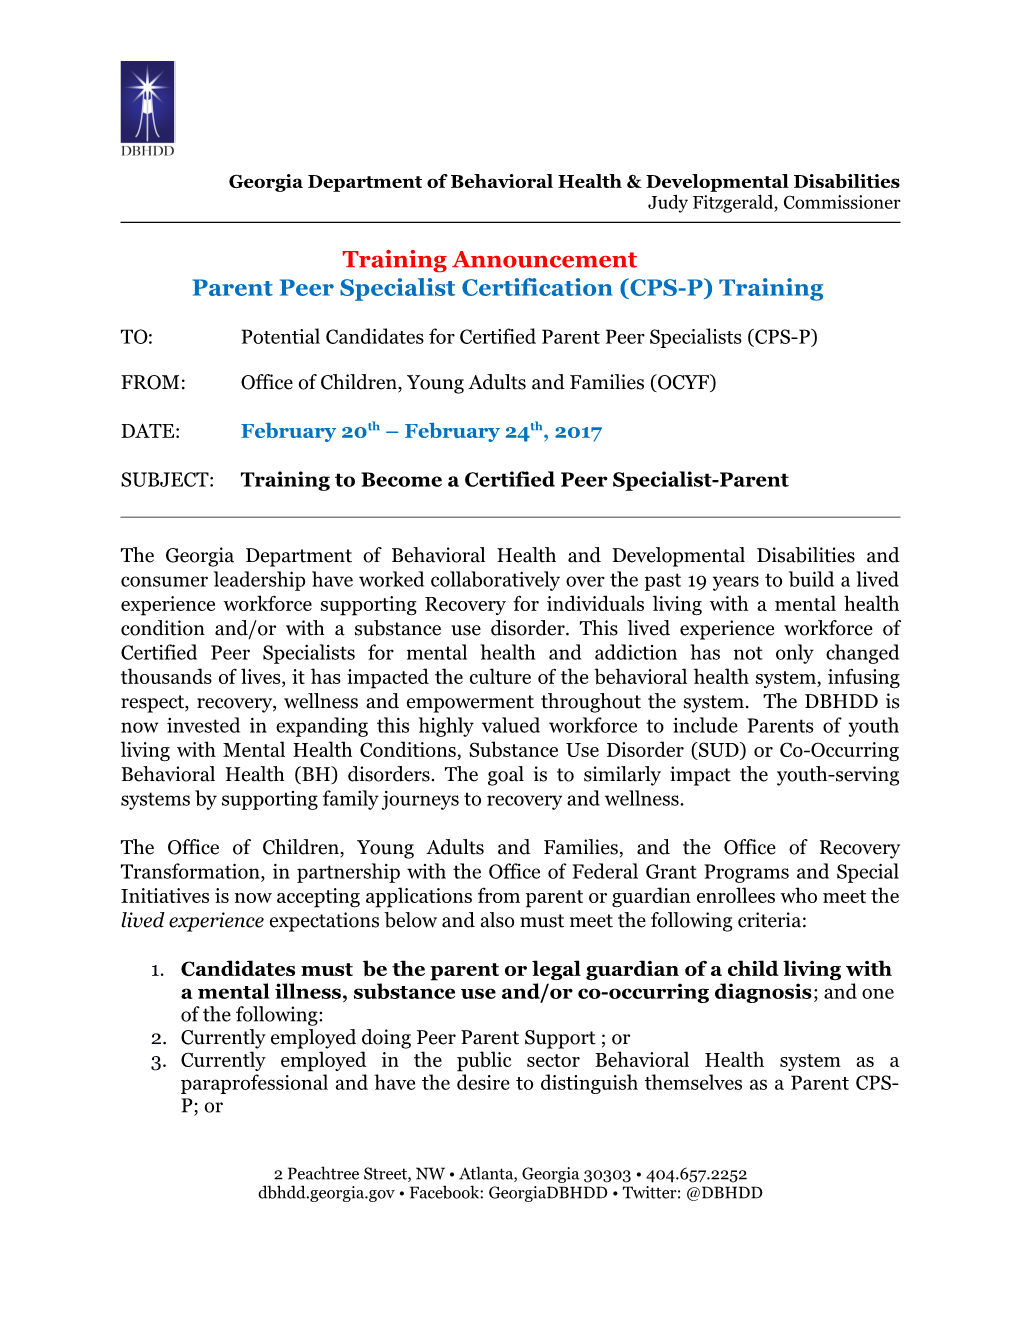 Parent Peer Specialist Certification (CPS-P) Training